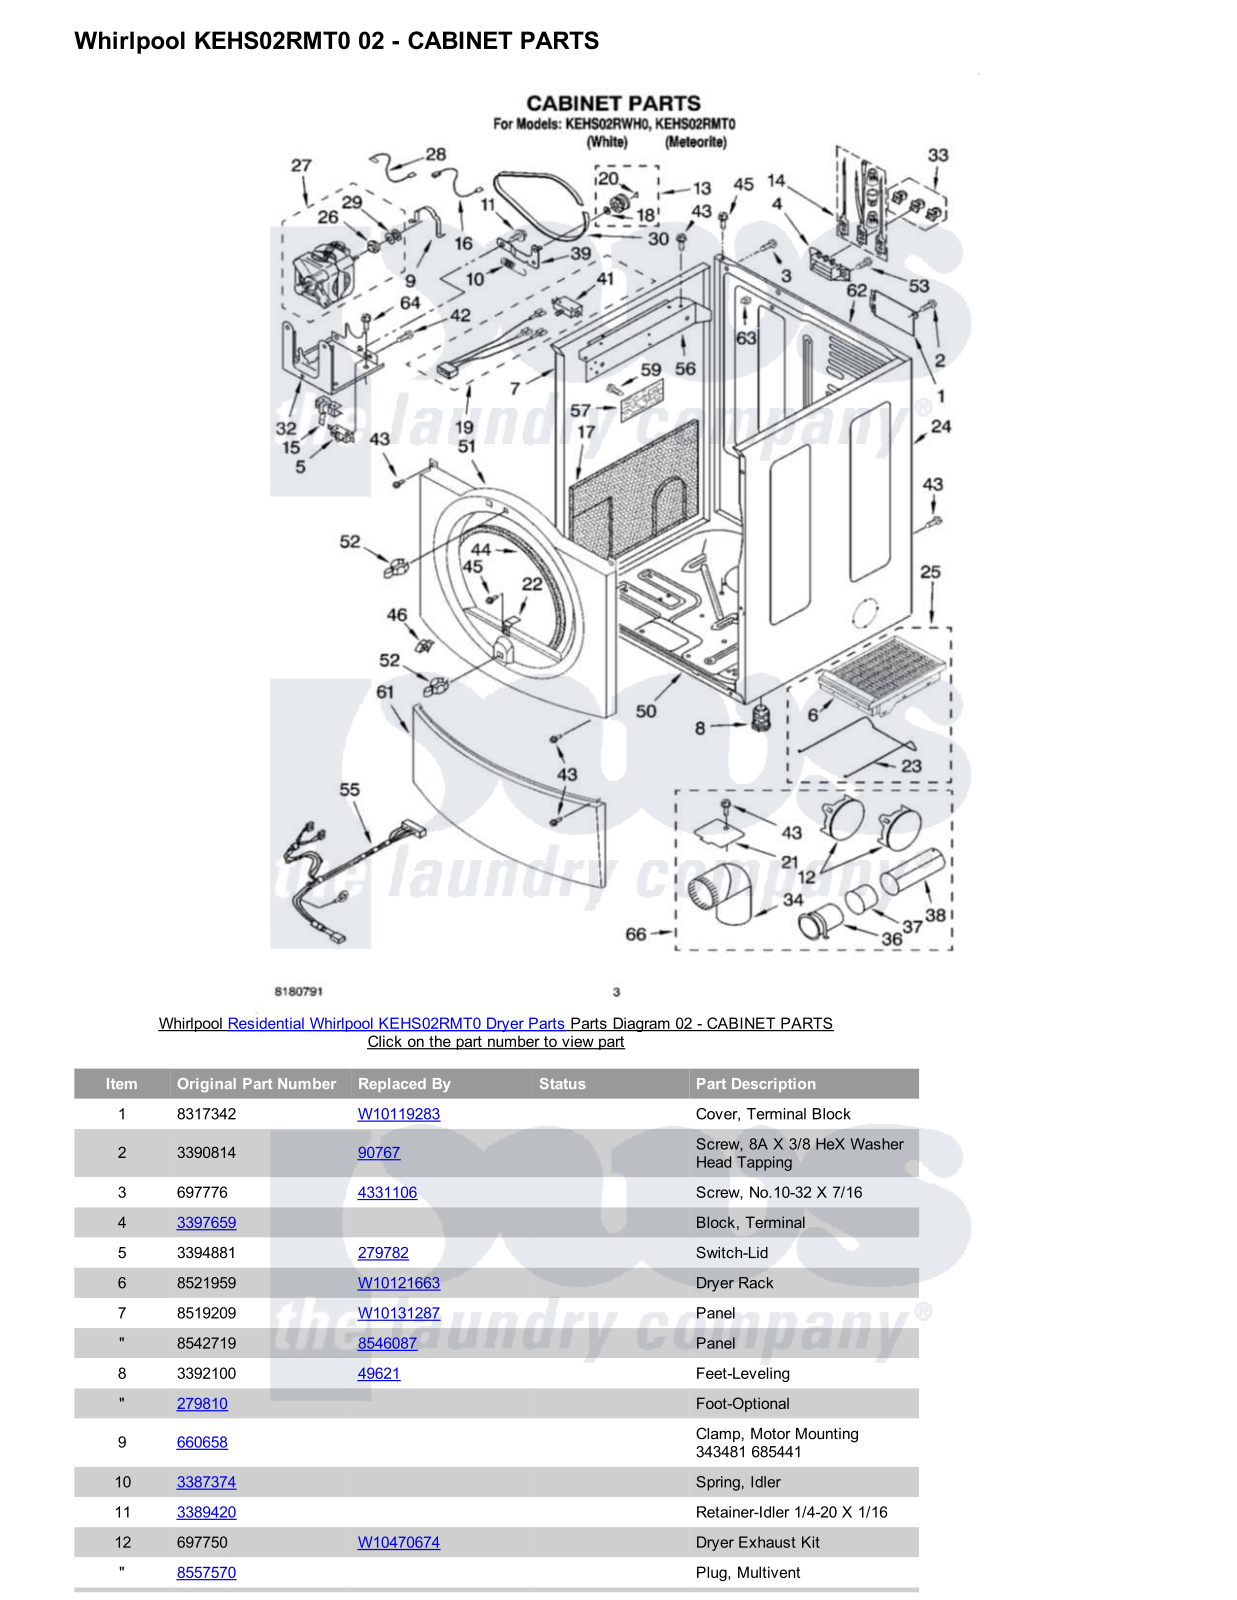 Whirlpool KEHS02RMT0 Parts Diagram